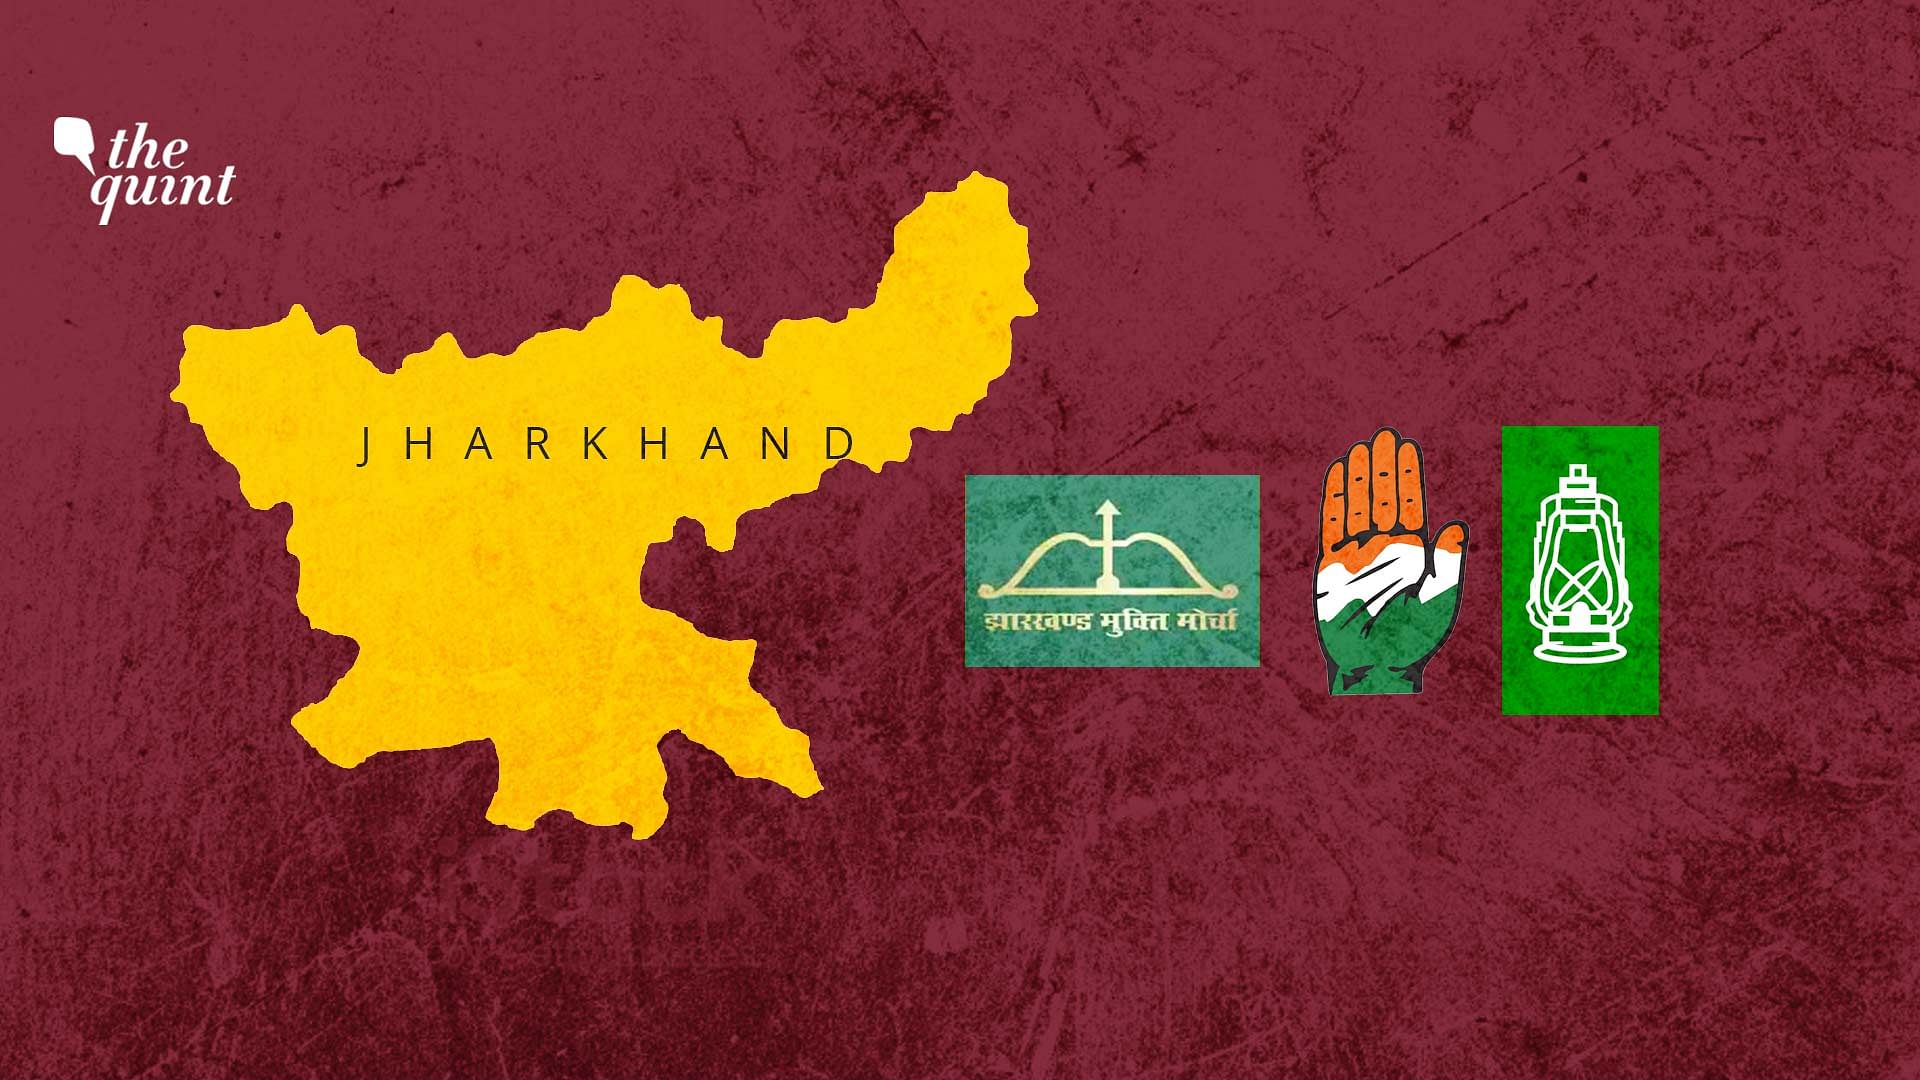 Image of Jharkhand map and the ‘Mahagathbandhan’ (JMM + Congress + RJD) symbols used for representation. ‘Mahagathbandhan’ won in the state.&nbsp;